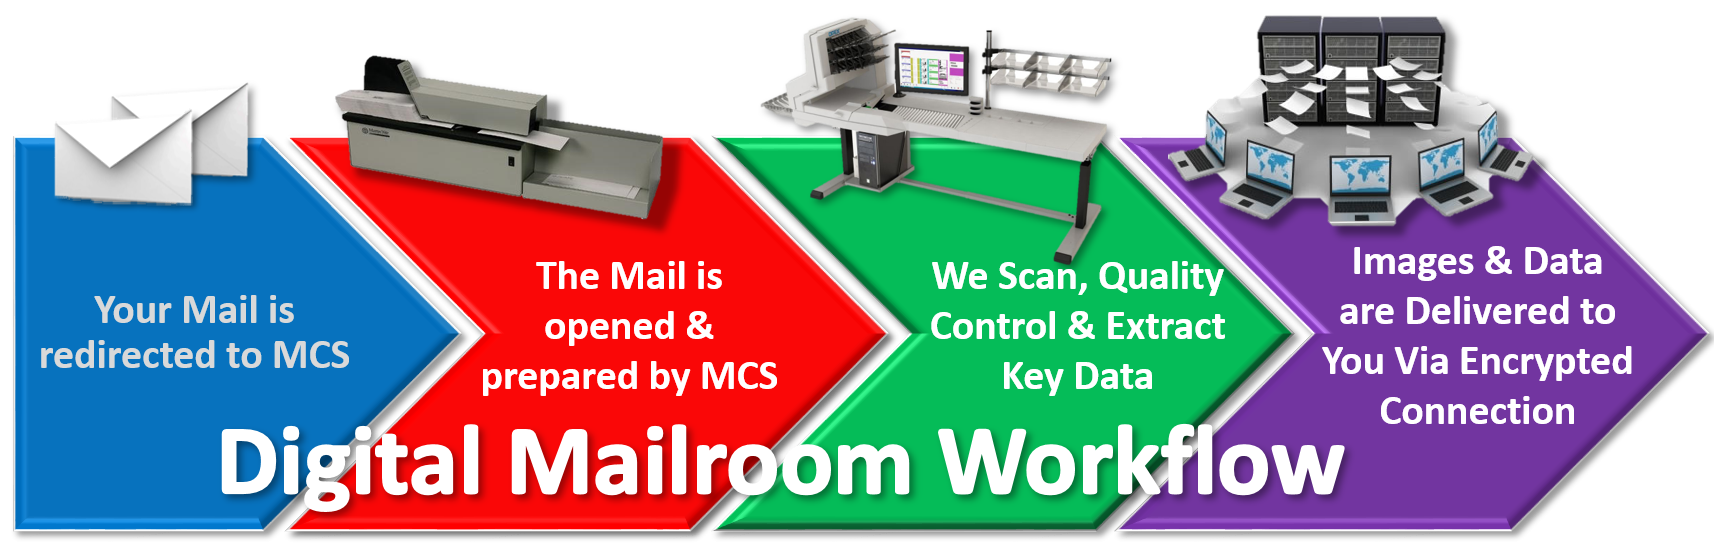 Vancouver digital mailroom workflow for MCS